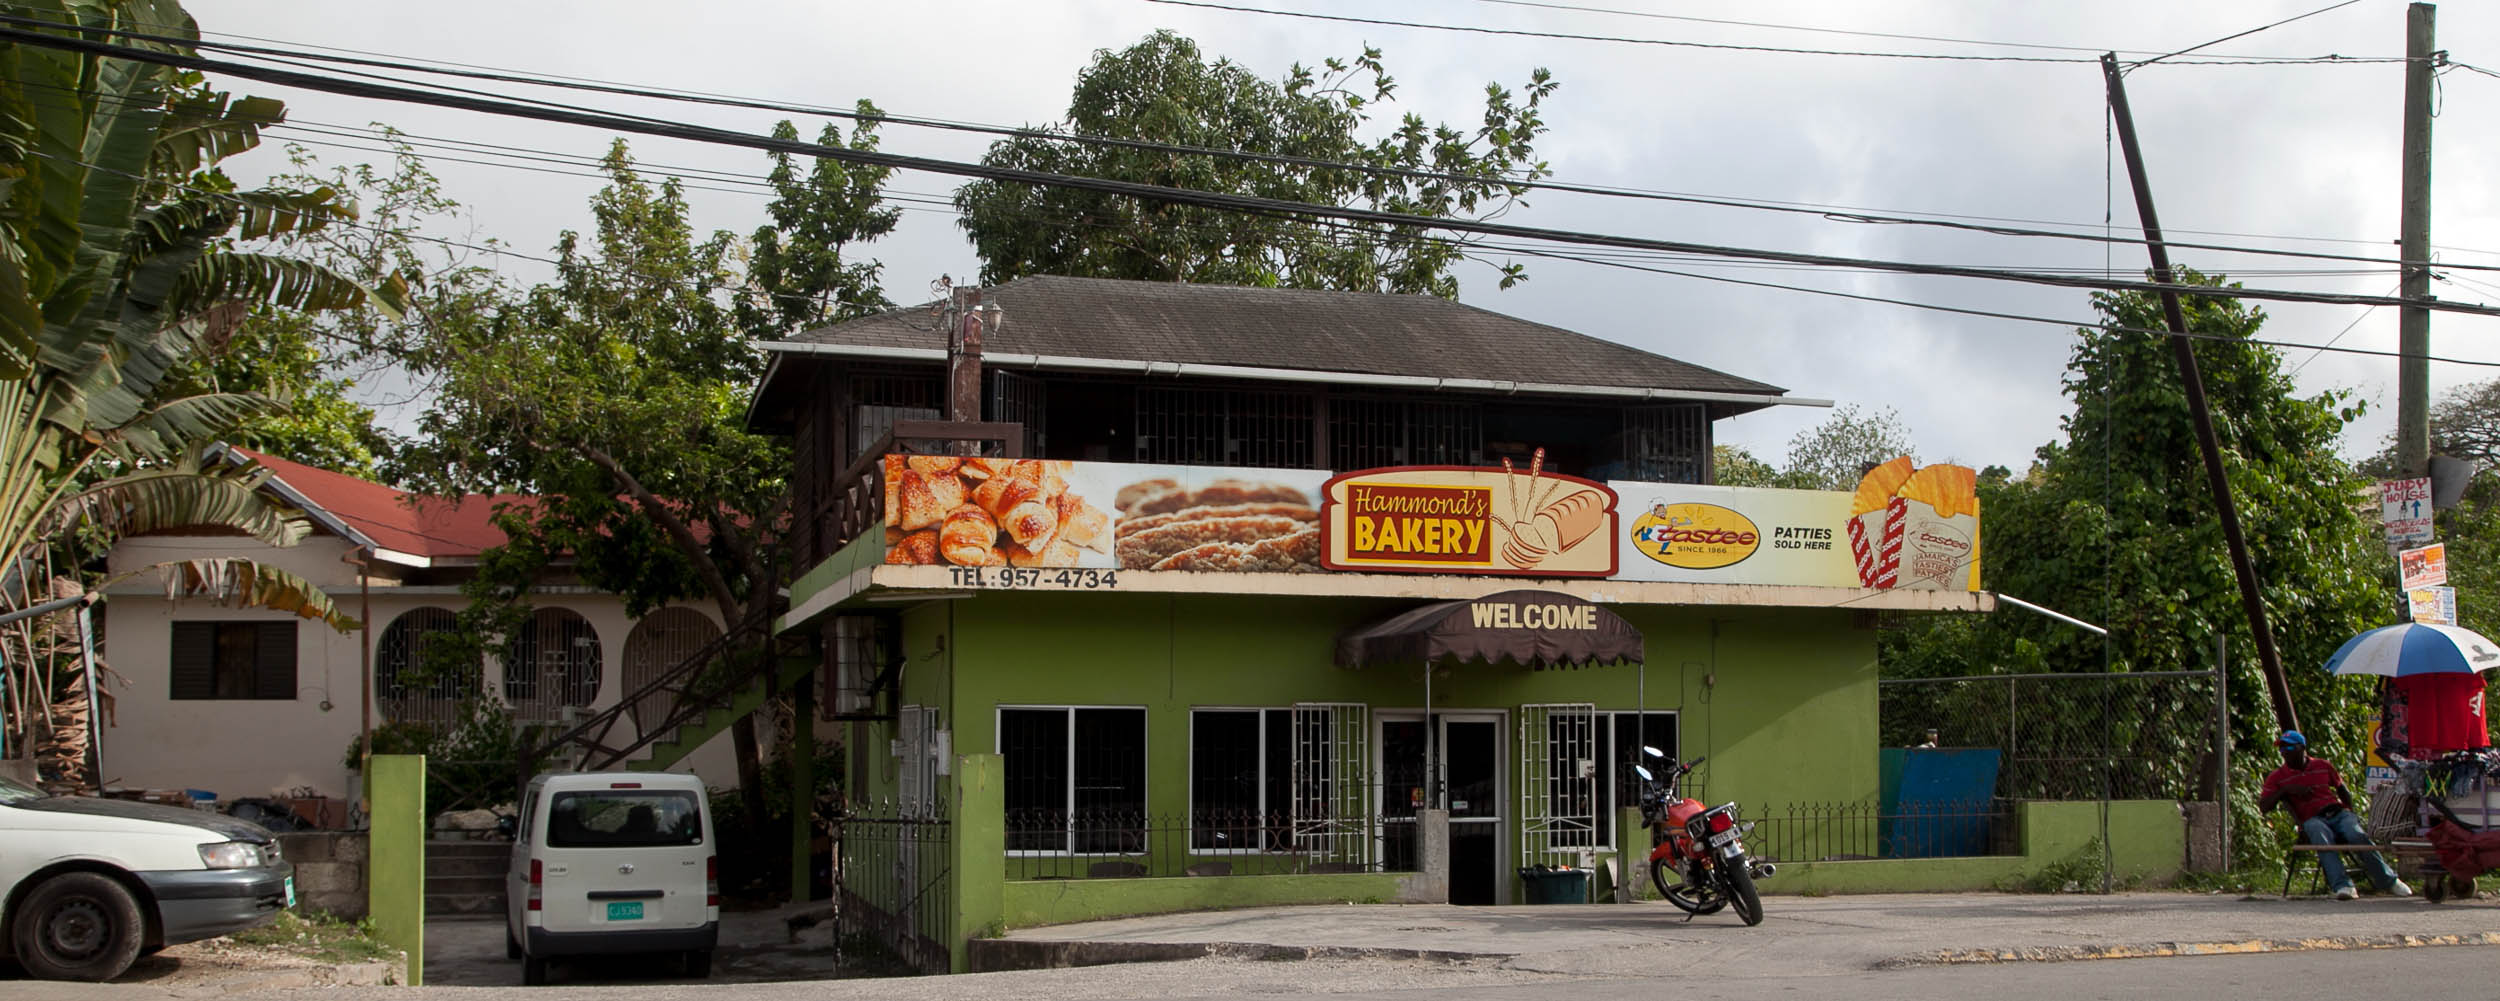 Hammond's Bakery, Negril Jamaica